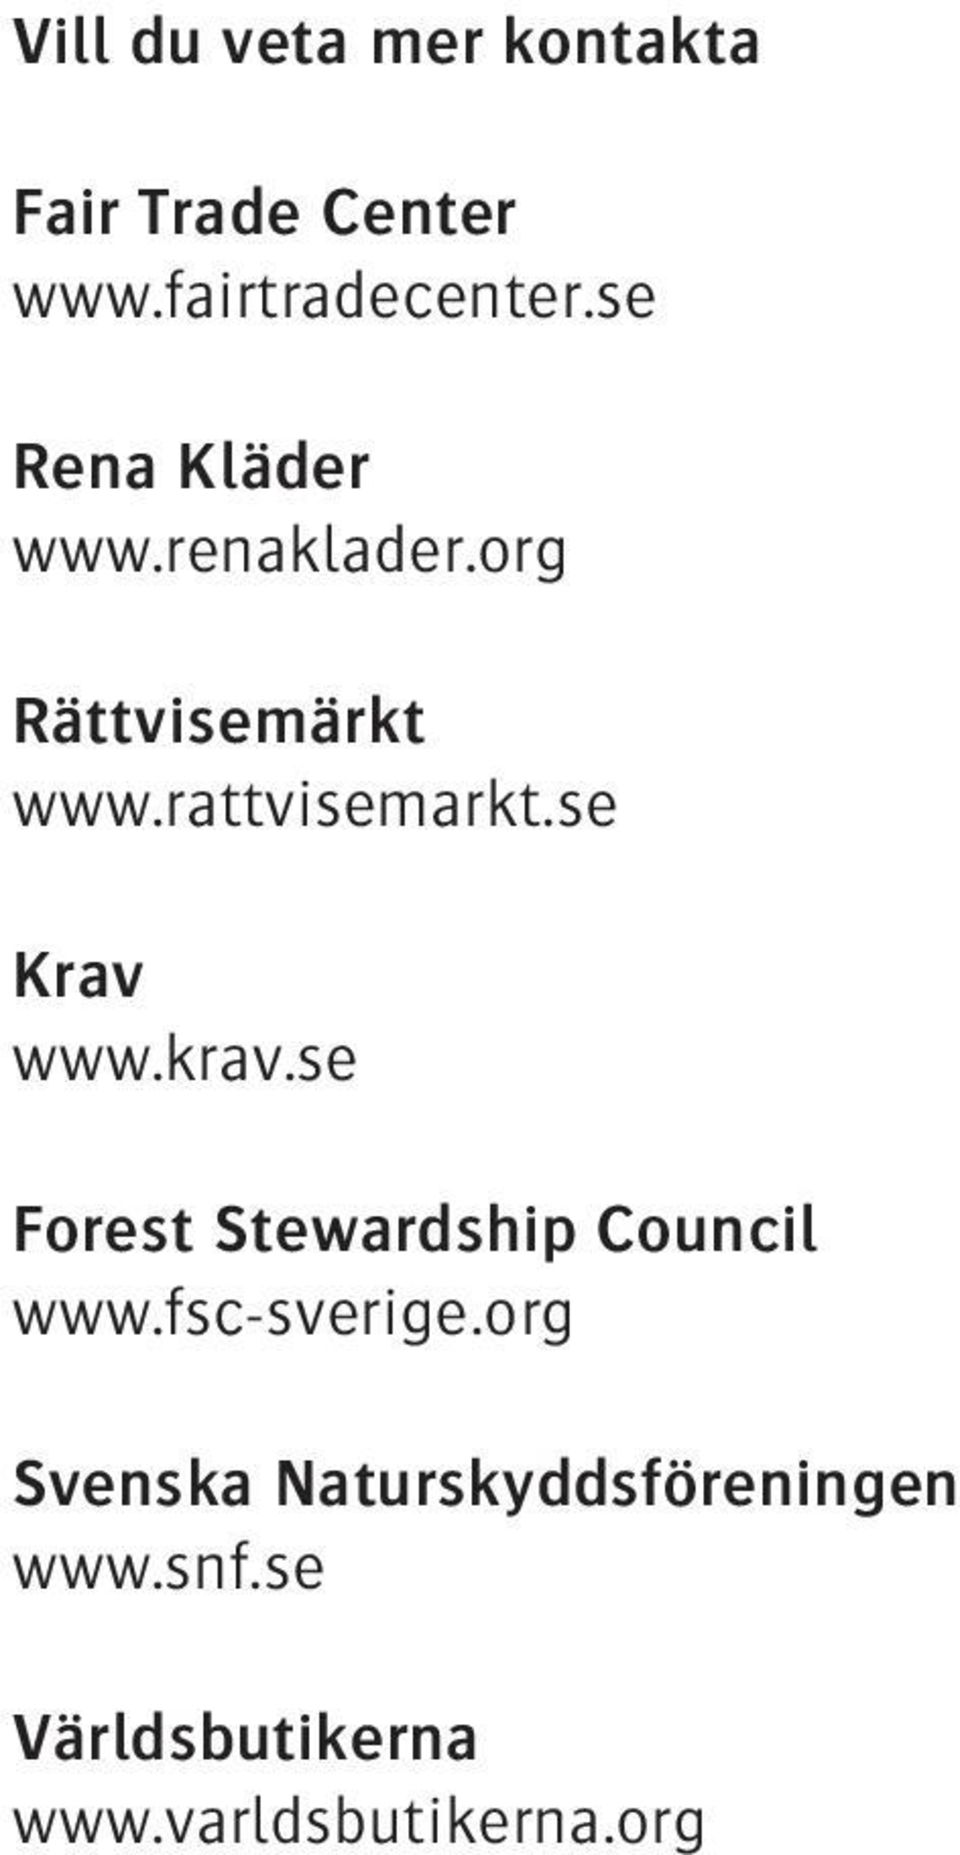 se Krav www.krav.se Forest Stewardship Council www.fsc-sverige.